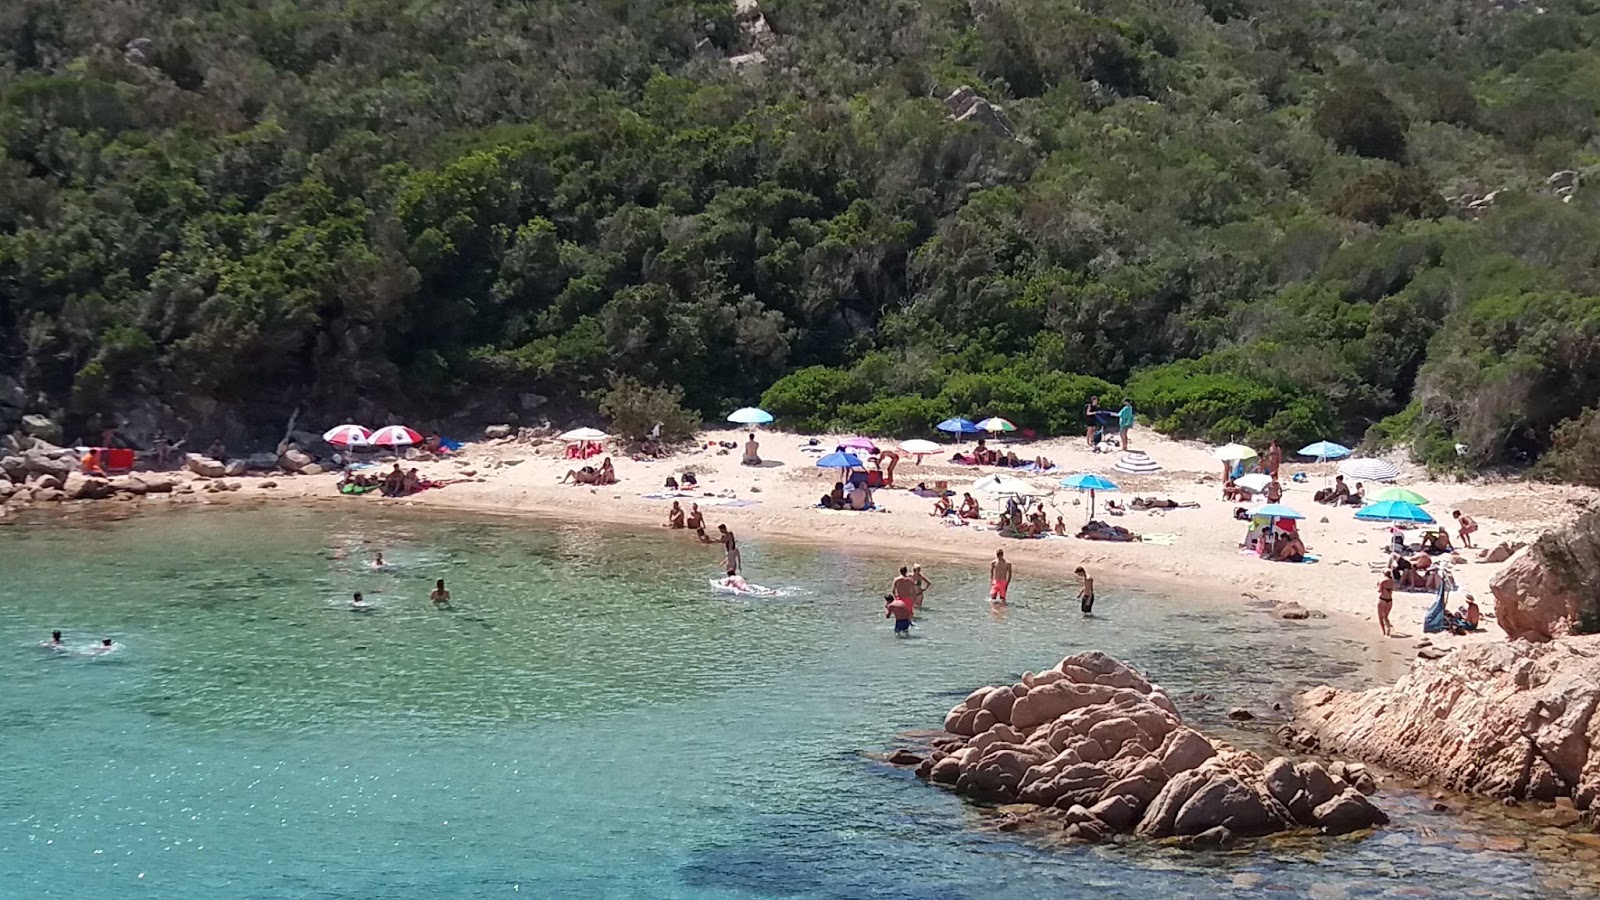 Foto van Spiaggia di Cala Brigantina met gemiddeld niveau van netheid